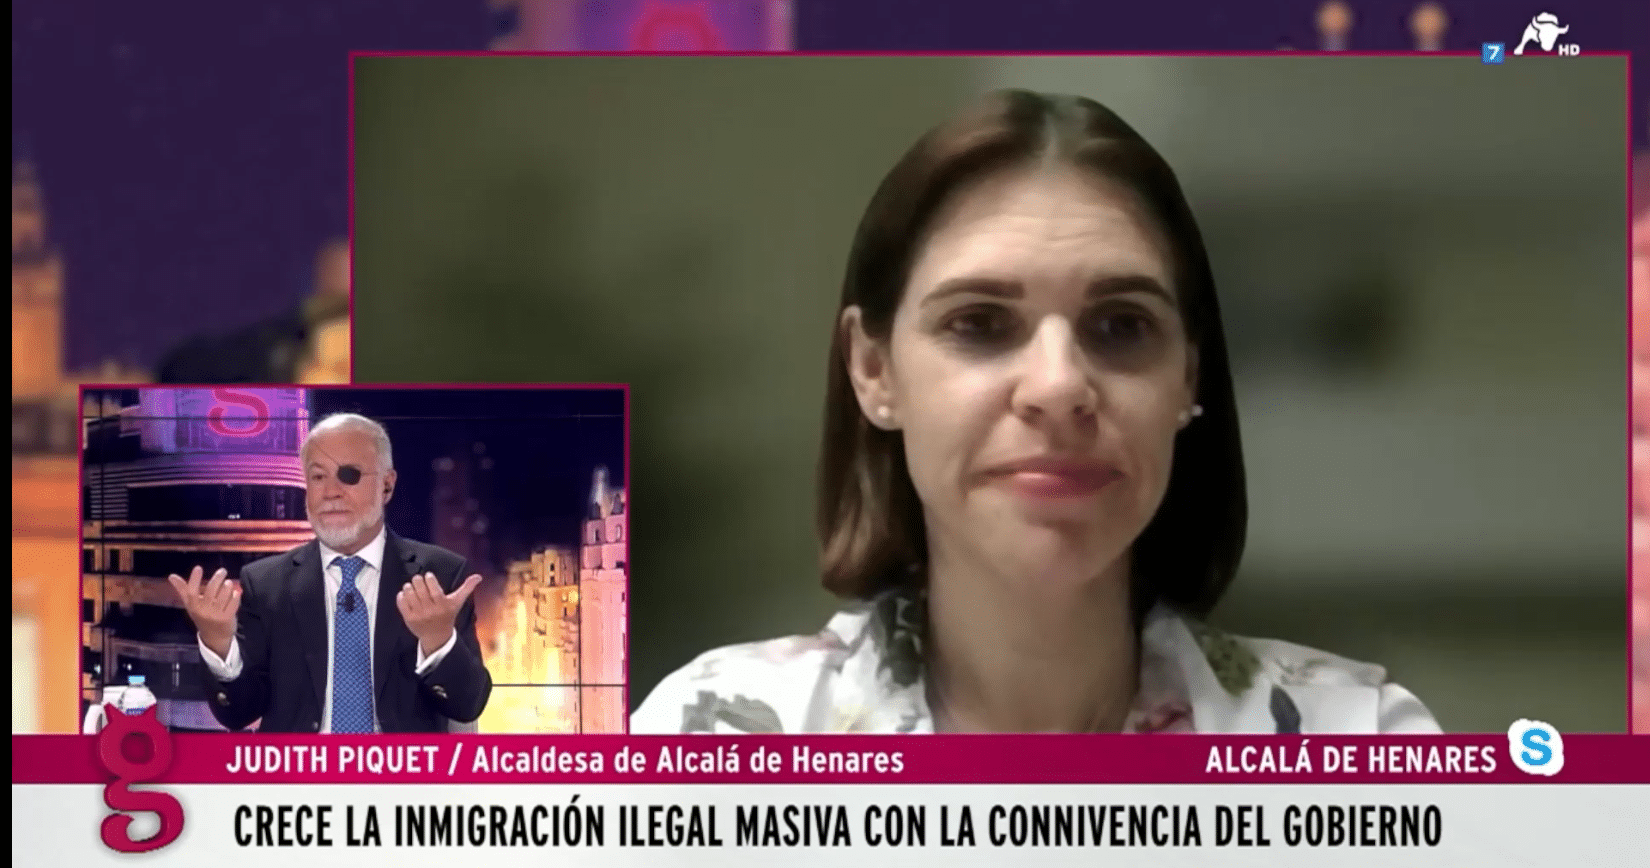  Sánchez ahoga Alcalá de Henares con inmigrantes ilegales tras llamar a la alcaldesa “xenófoba”